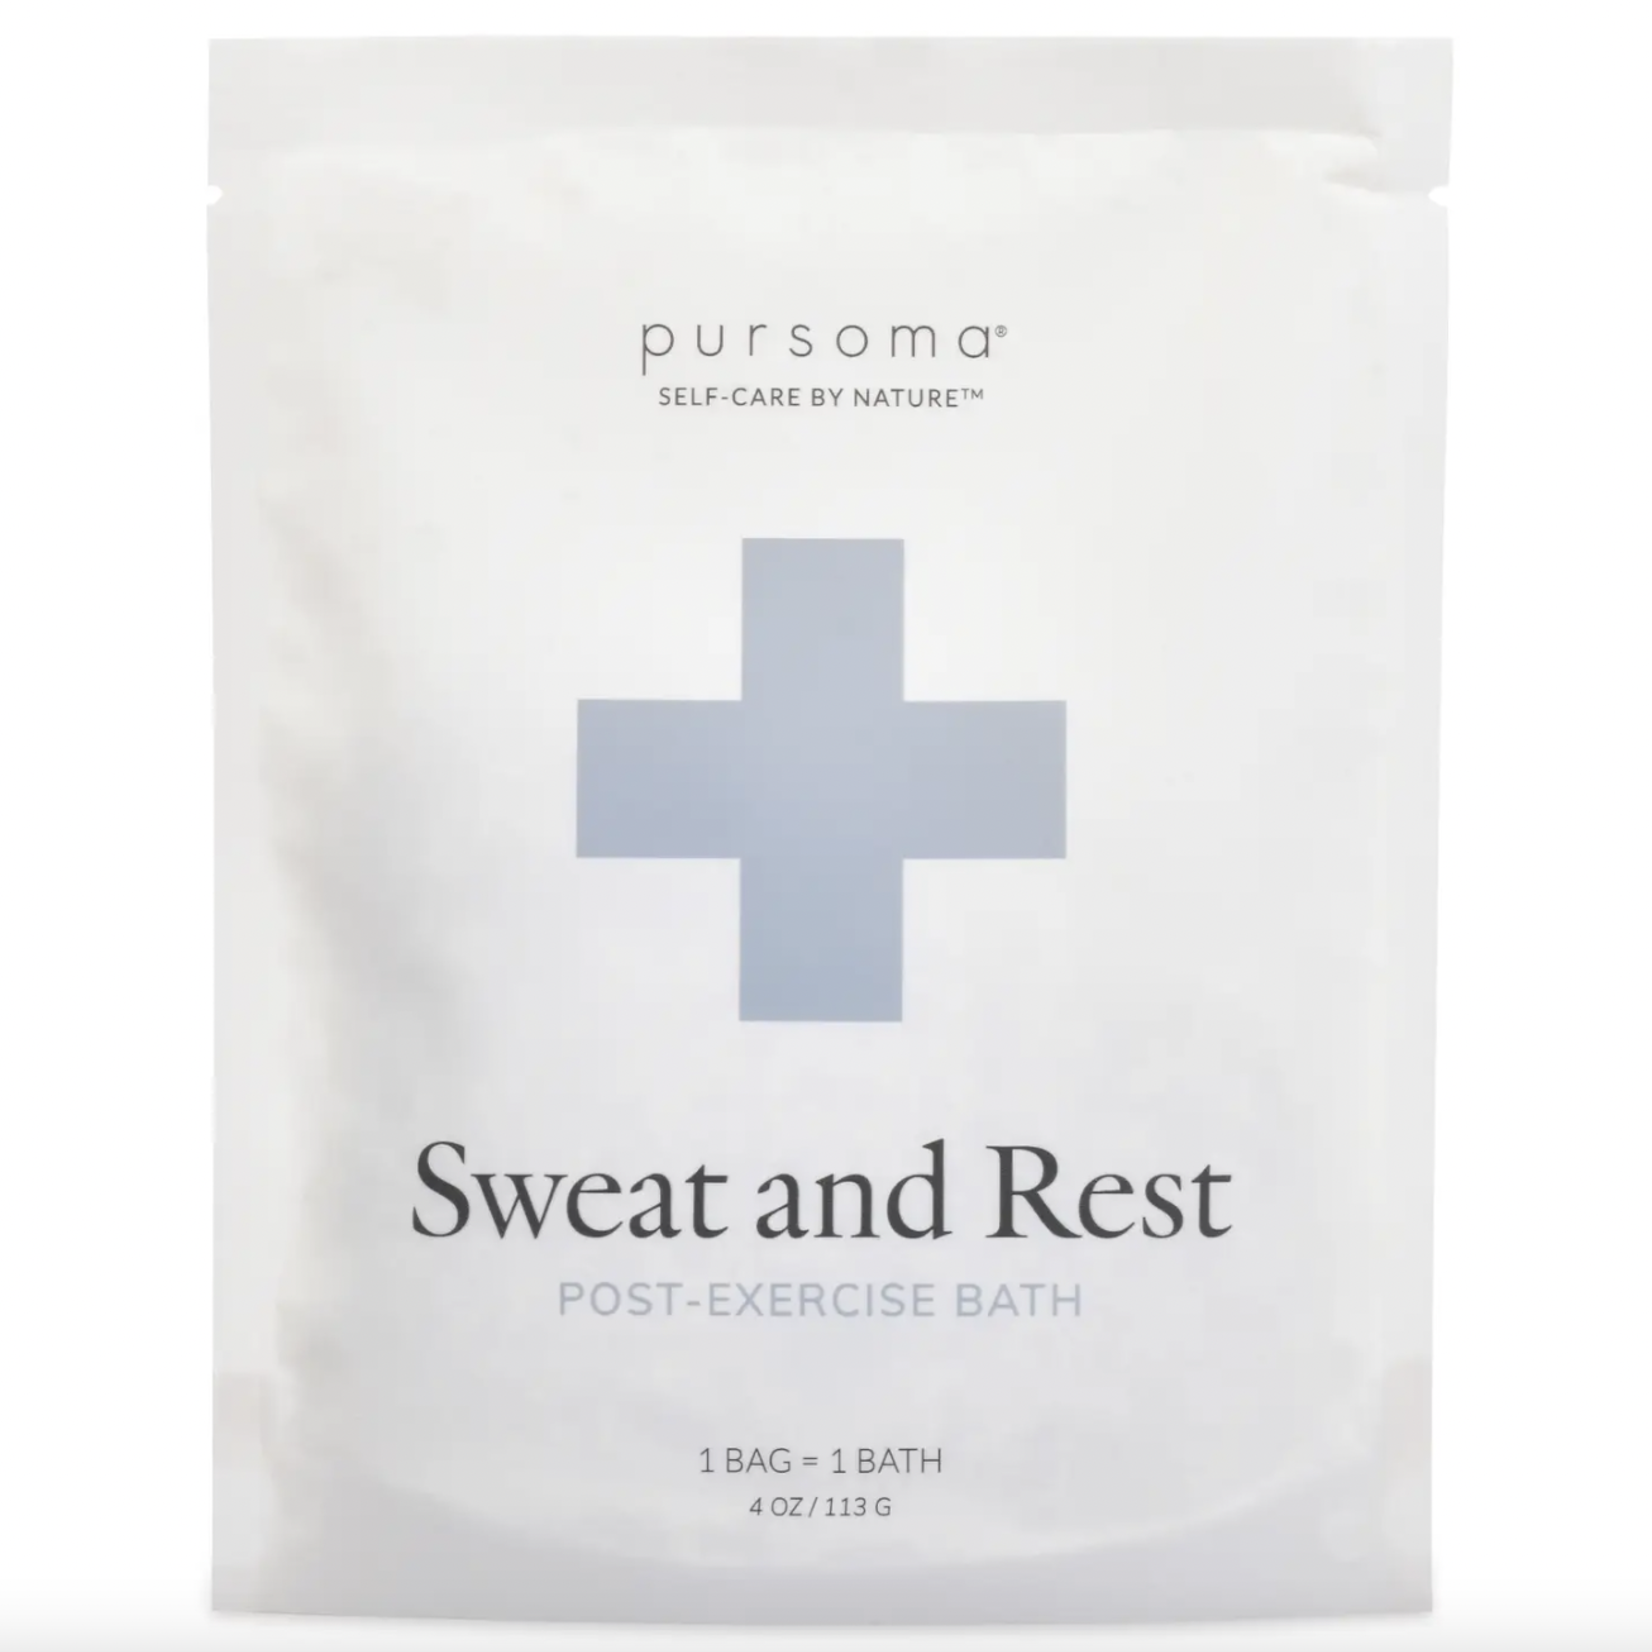 Pursoma Sweat & Rest